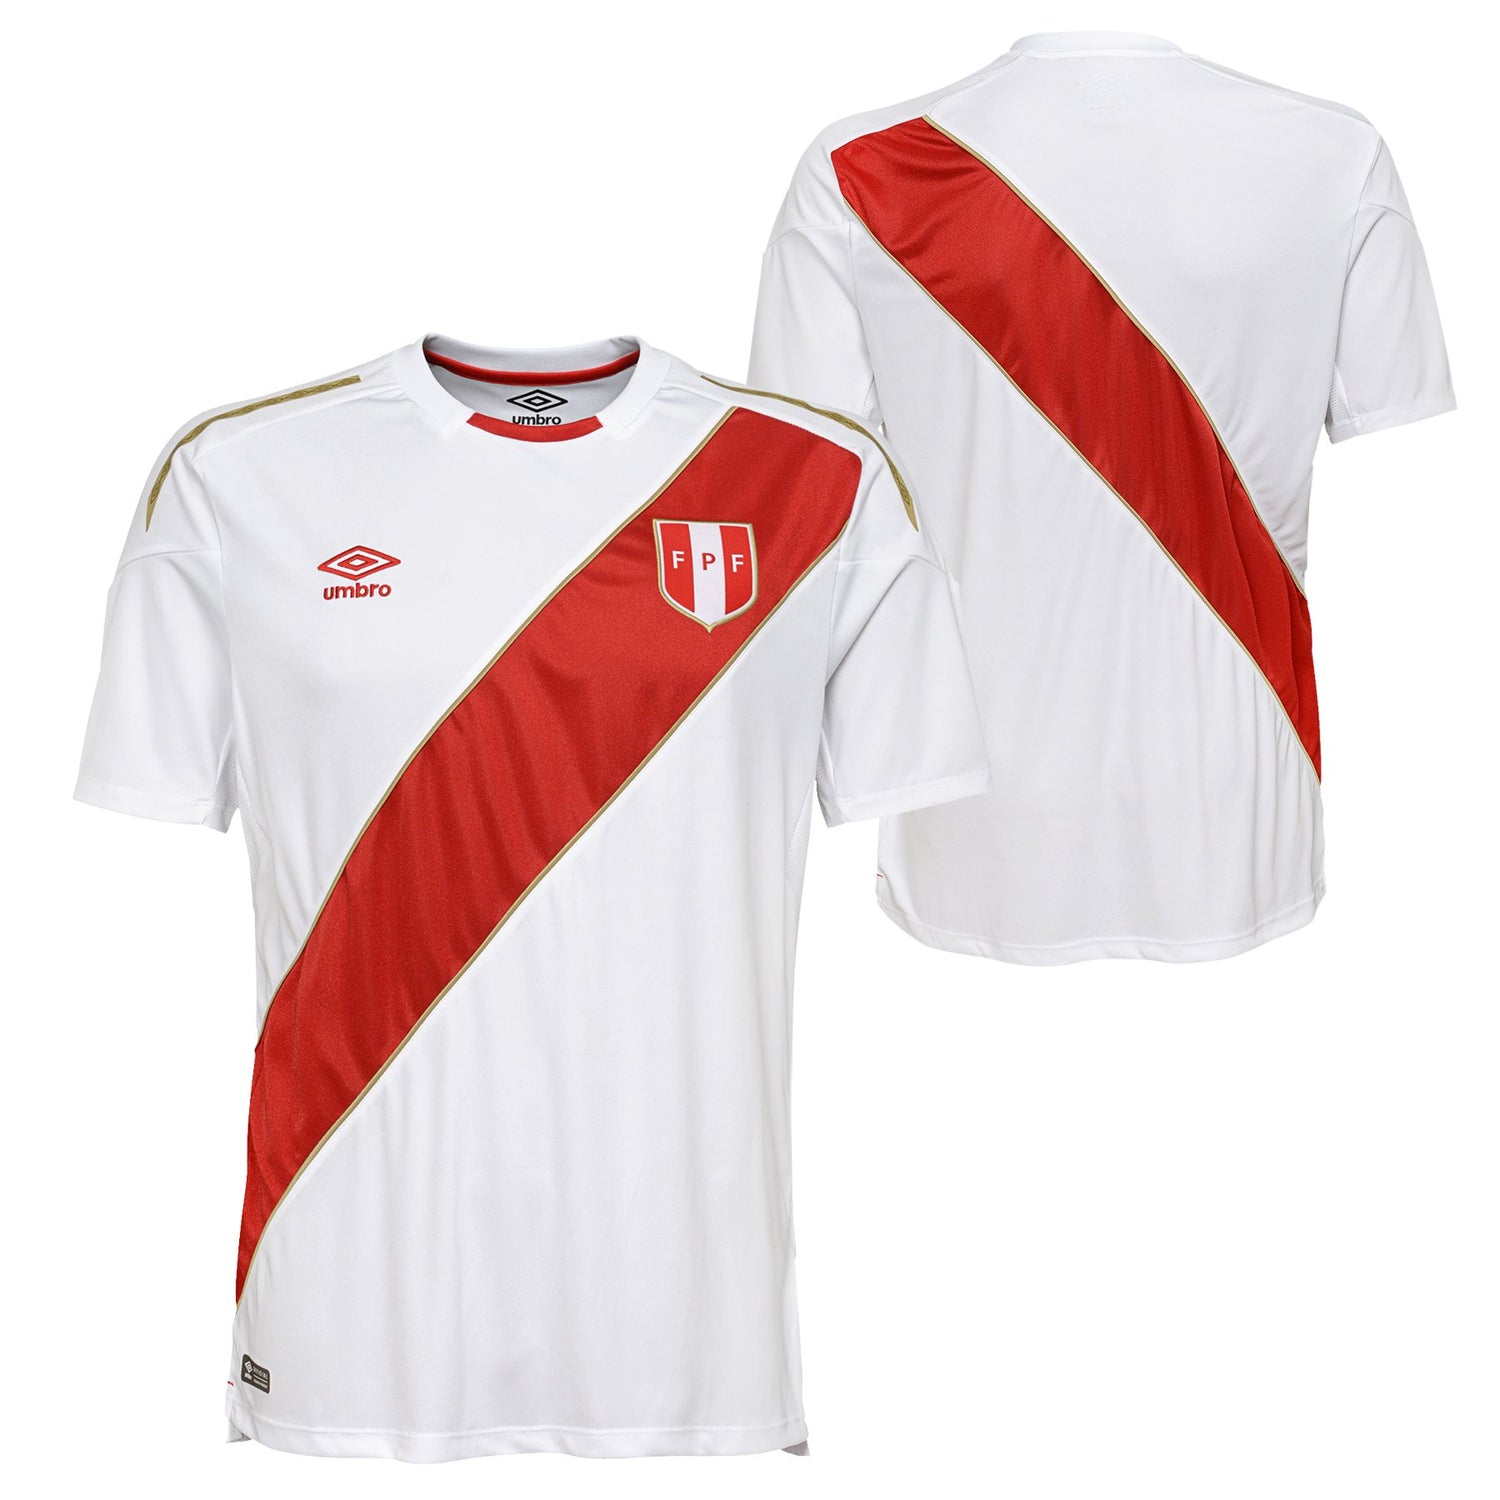 UMBRO Peru 2018 Home S/S Jersey